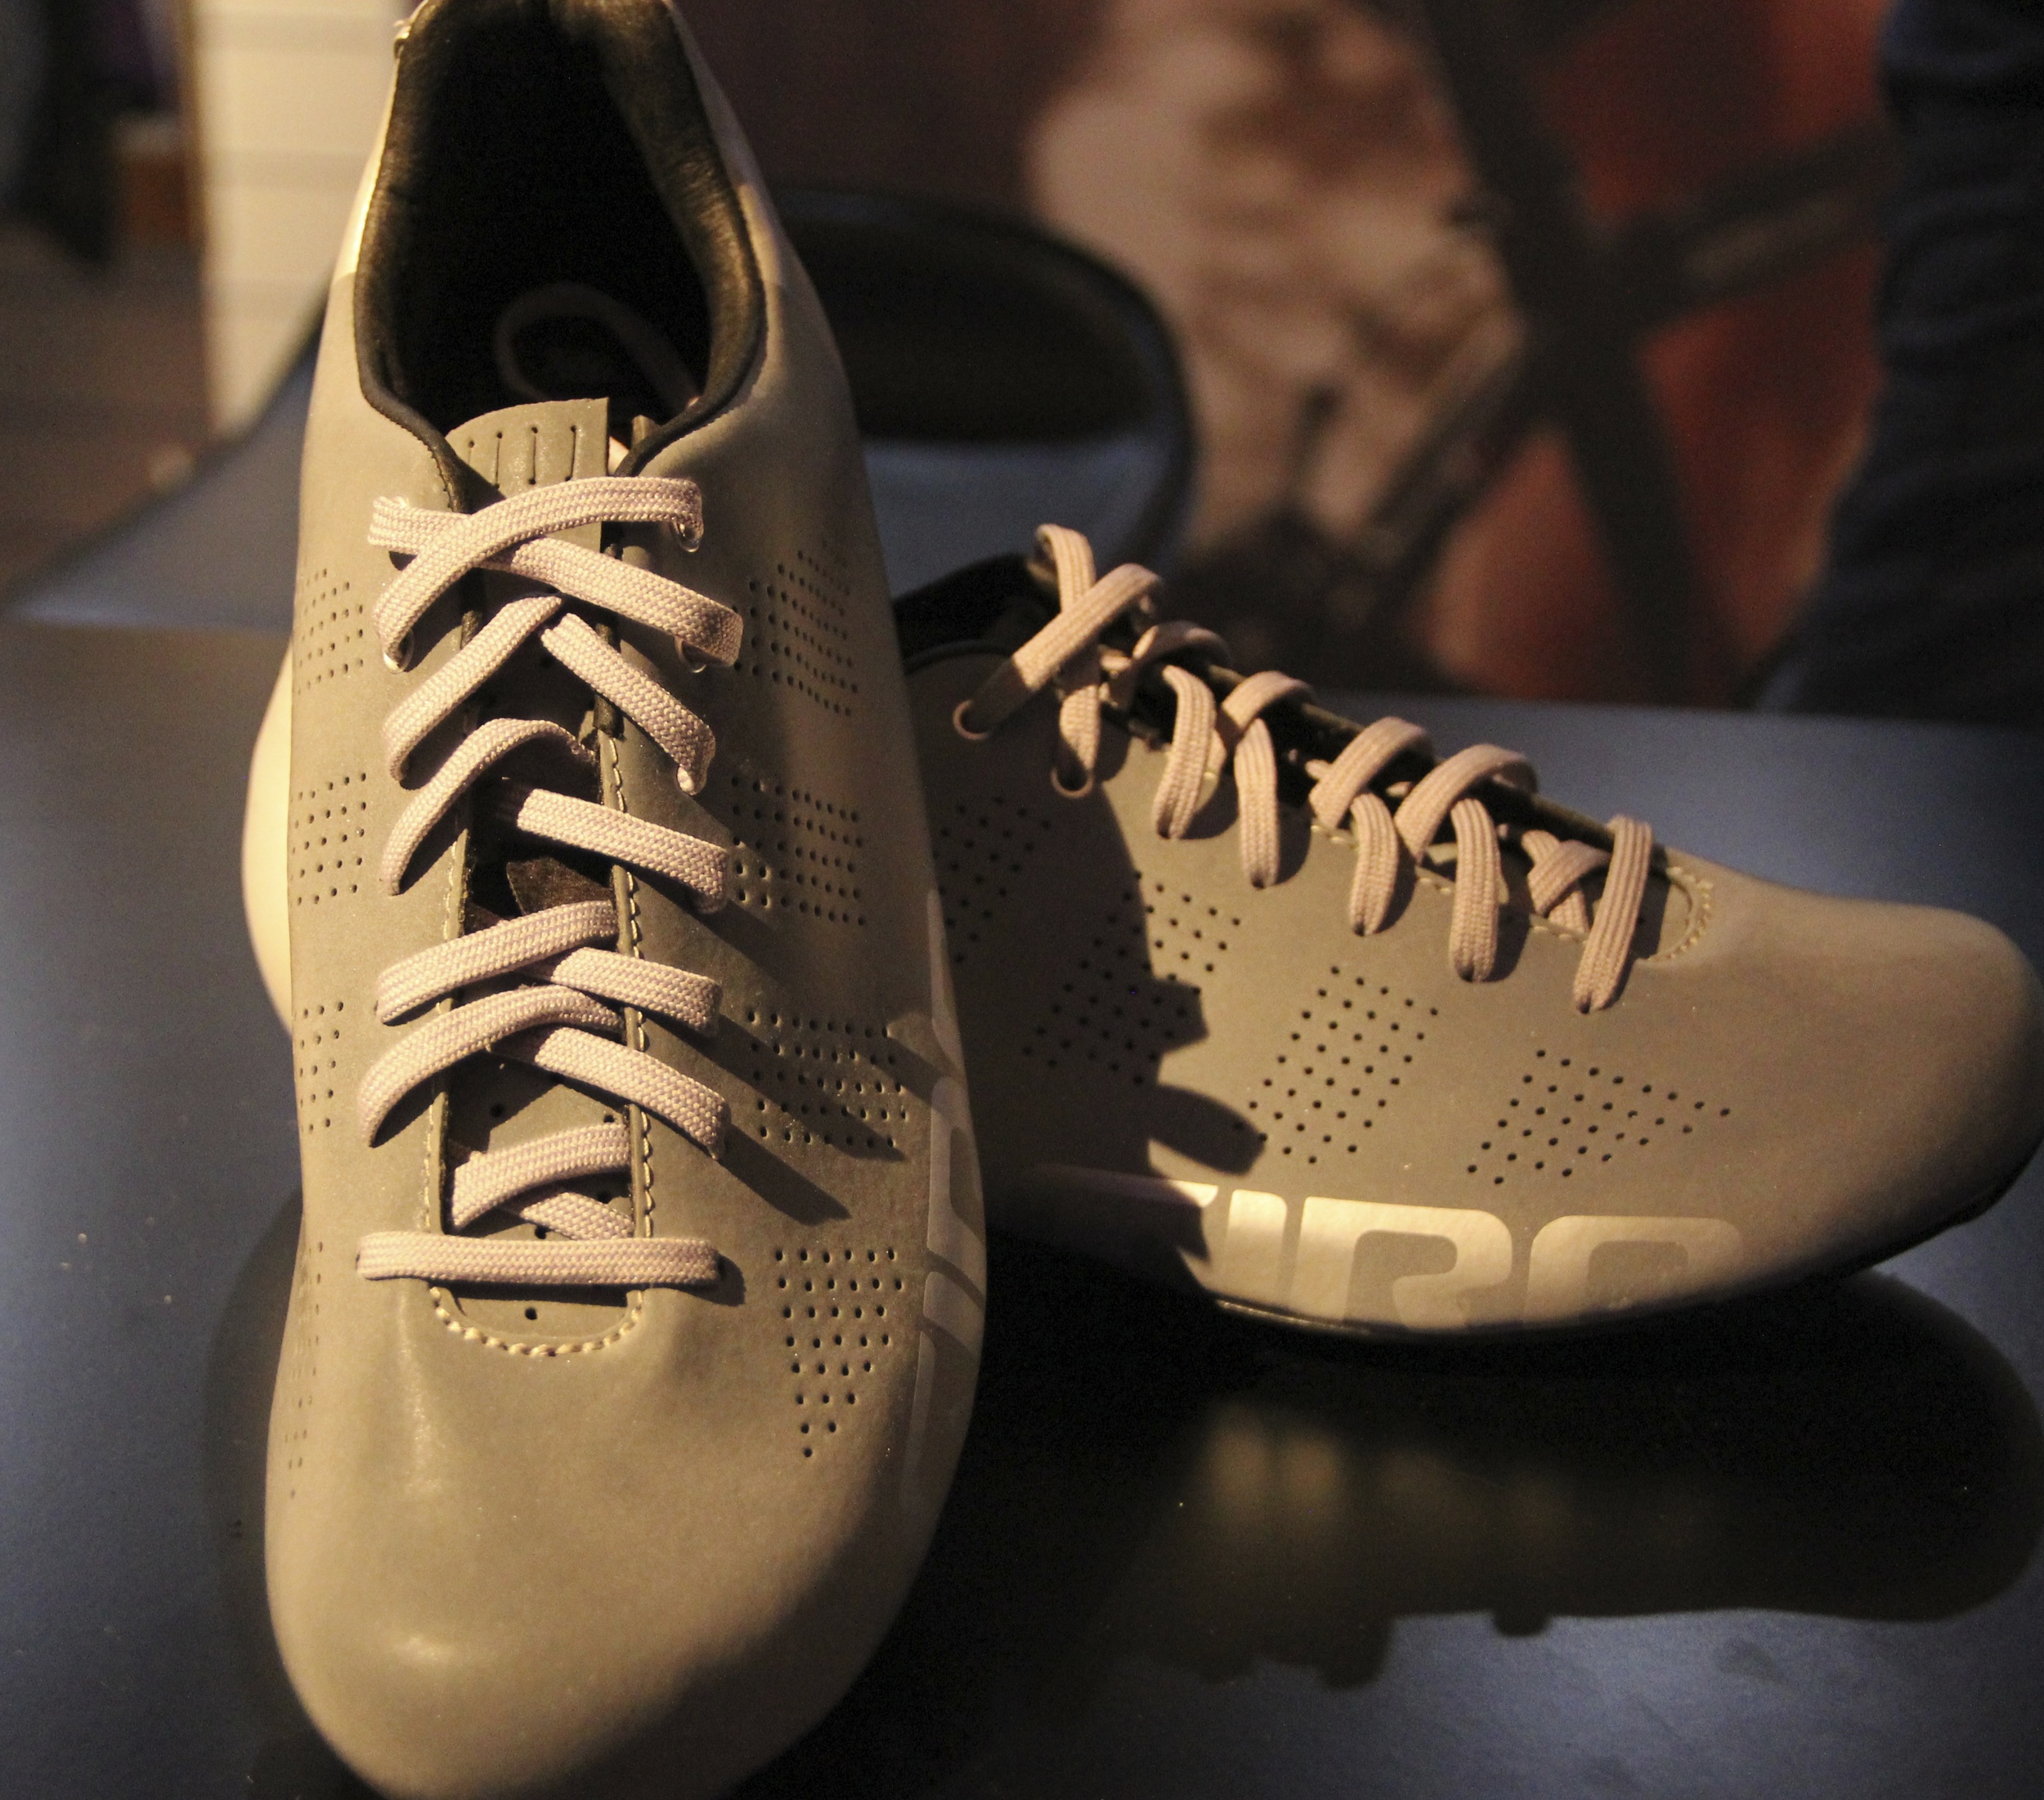 Giro reflective shoes